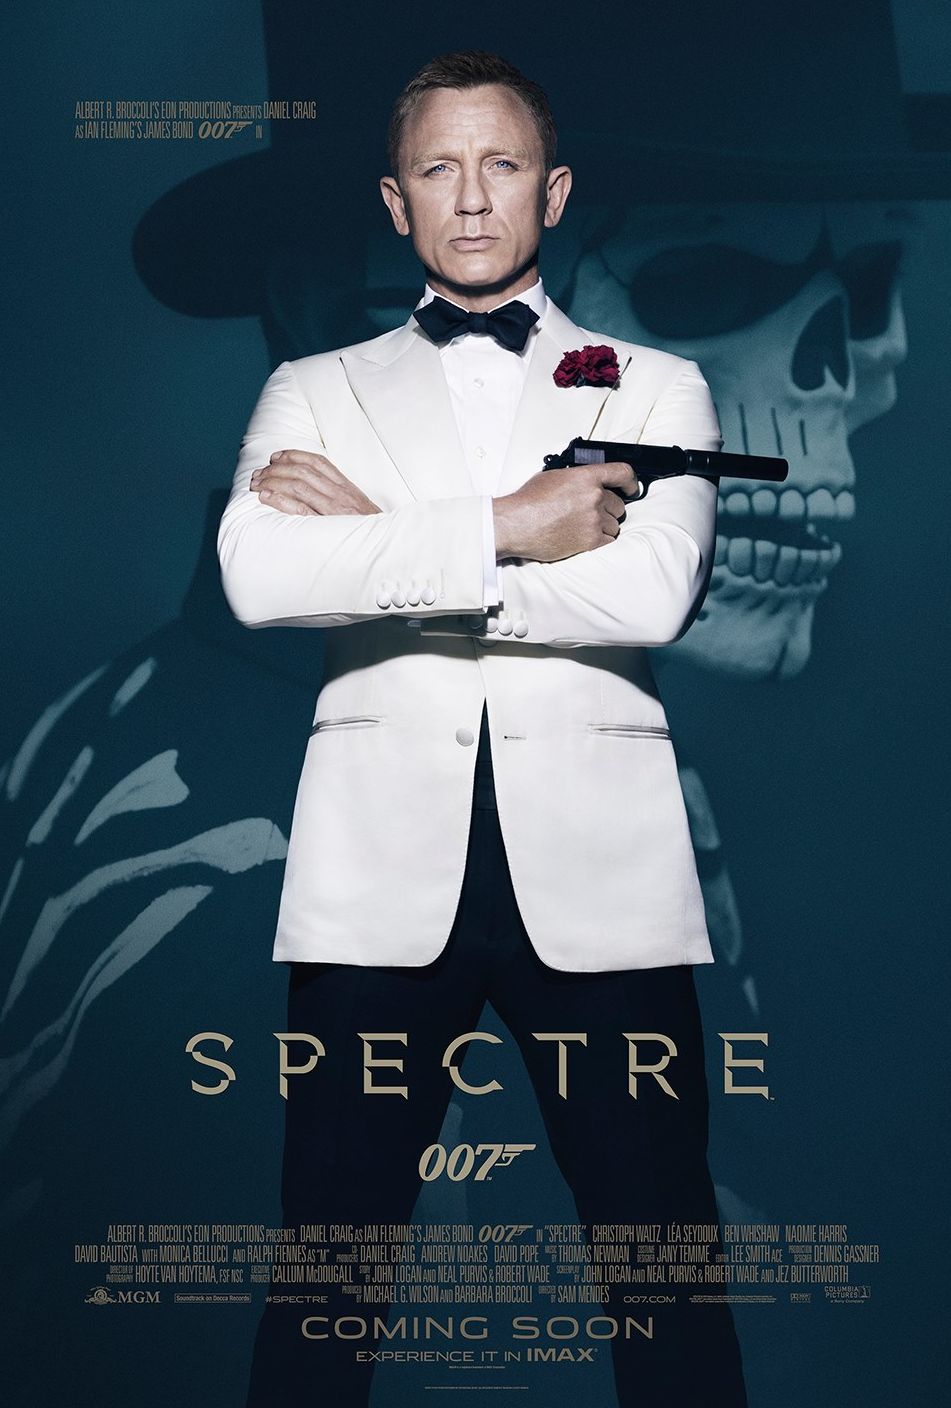 Solo Bond Spectre Poster